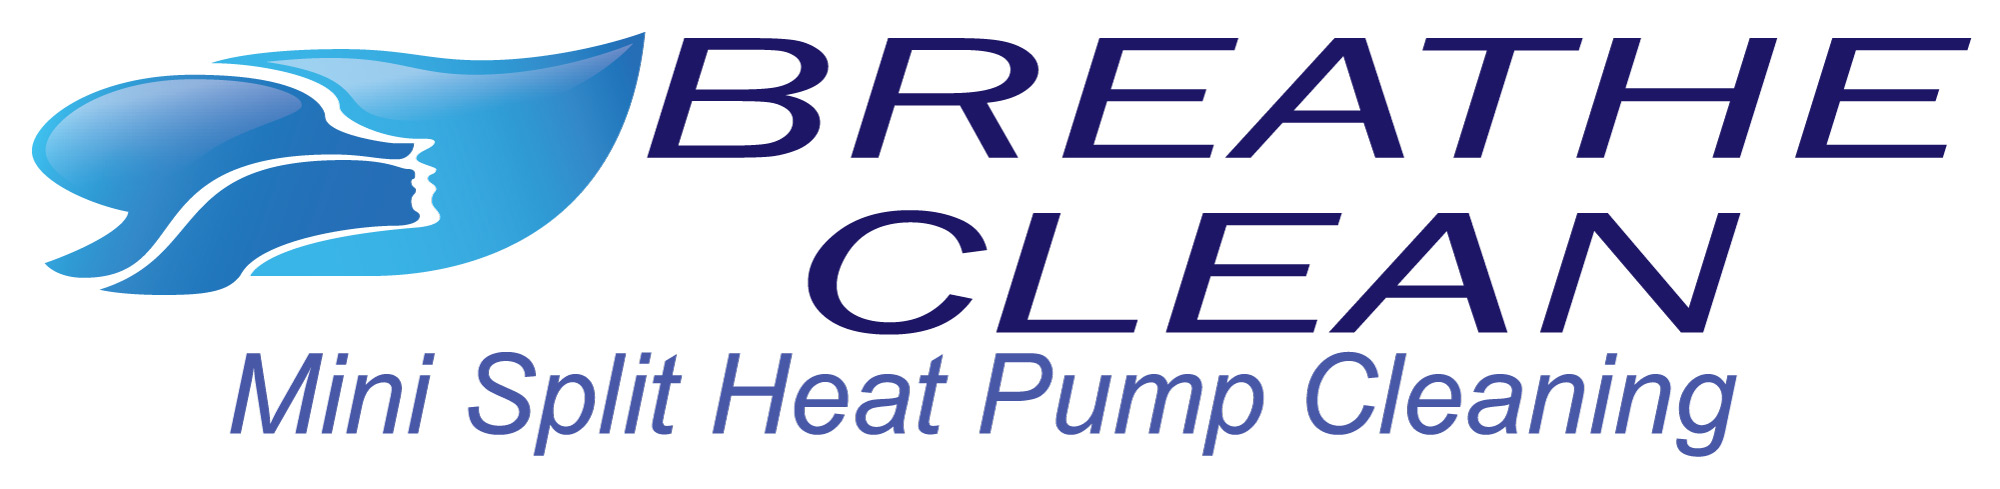 Breathe Clean Logo